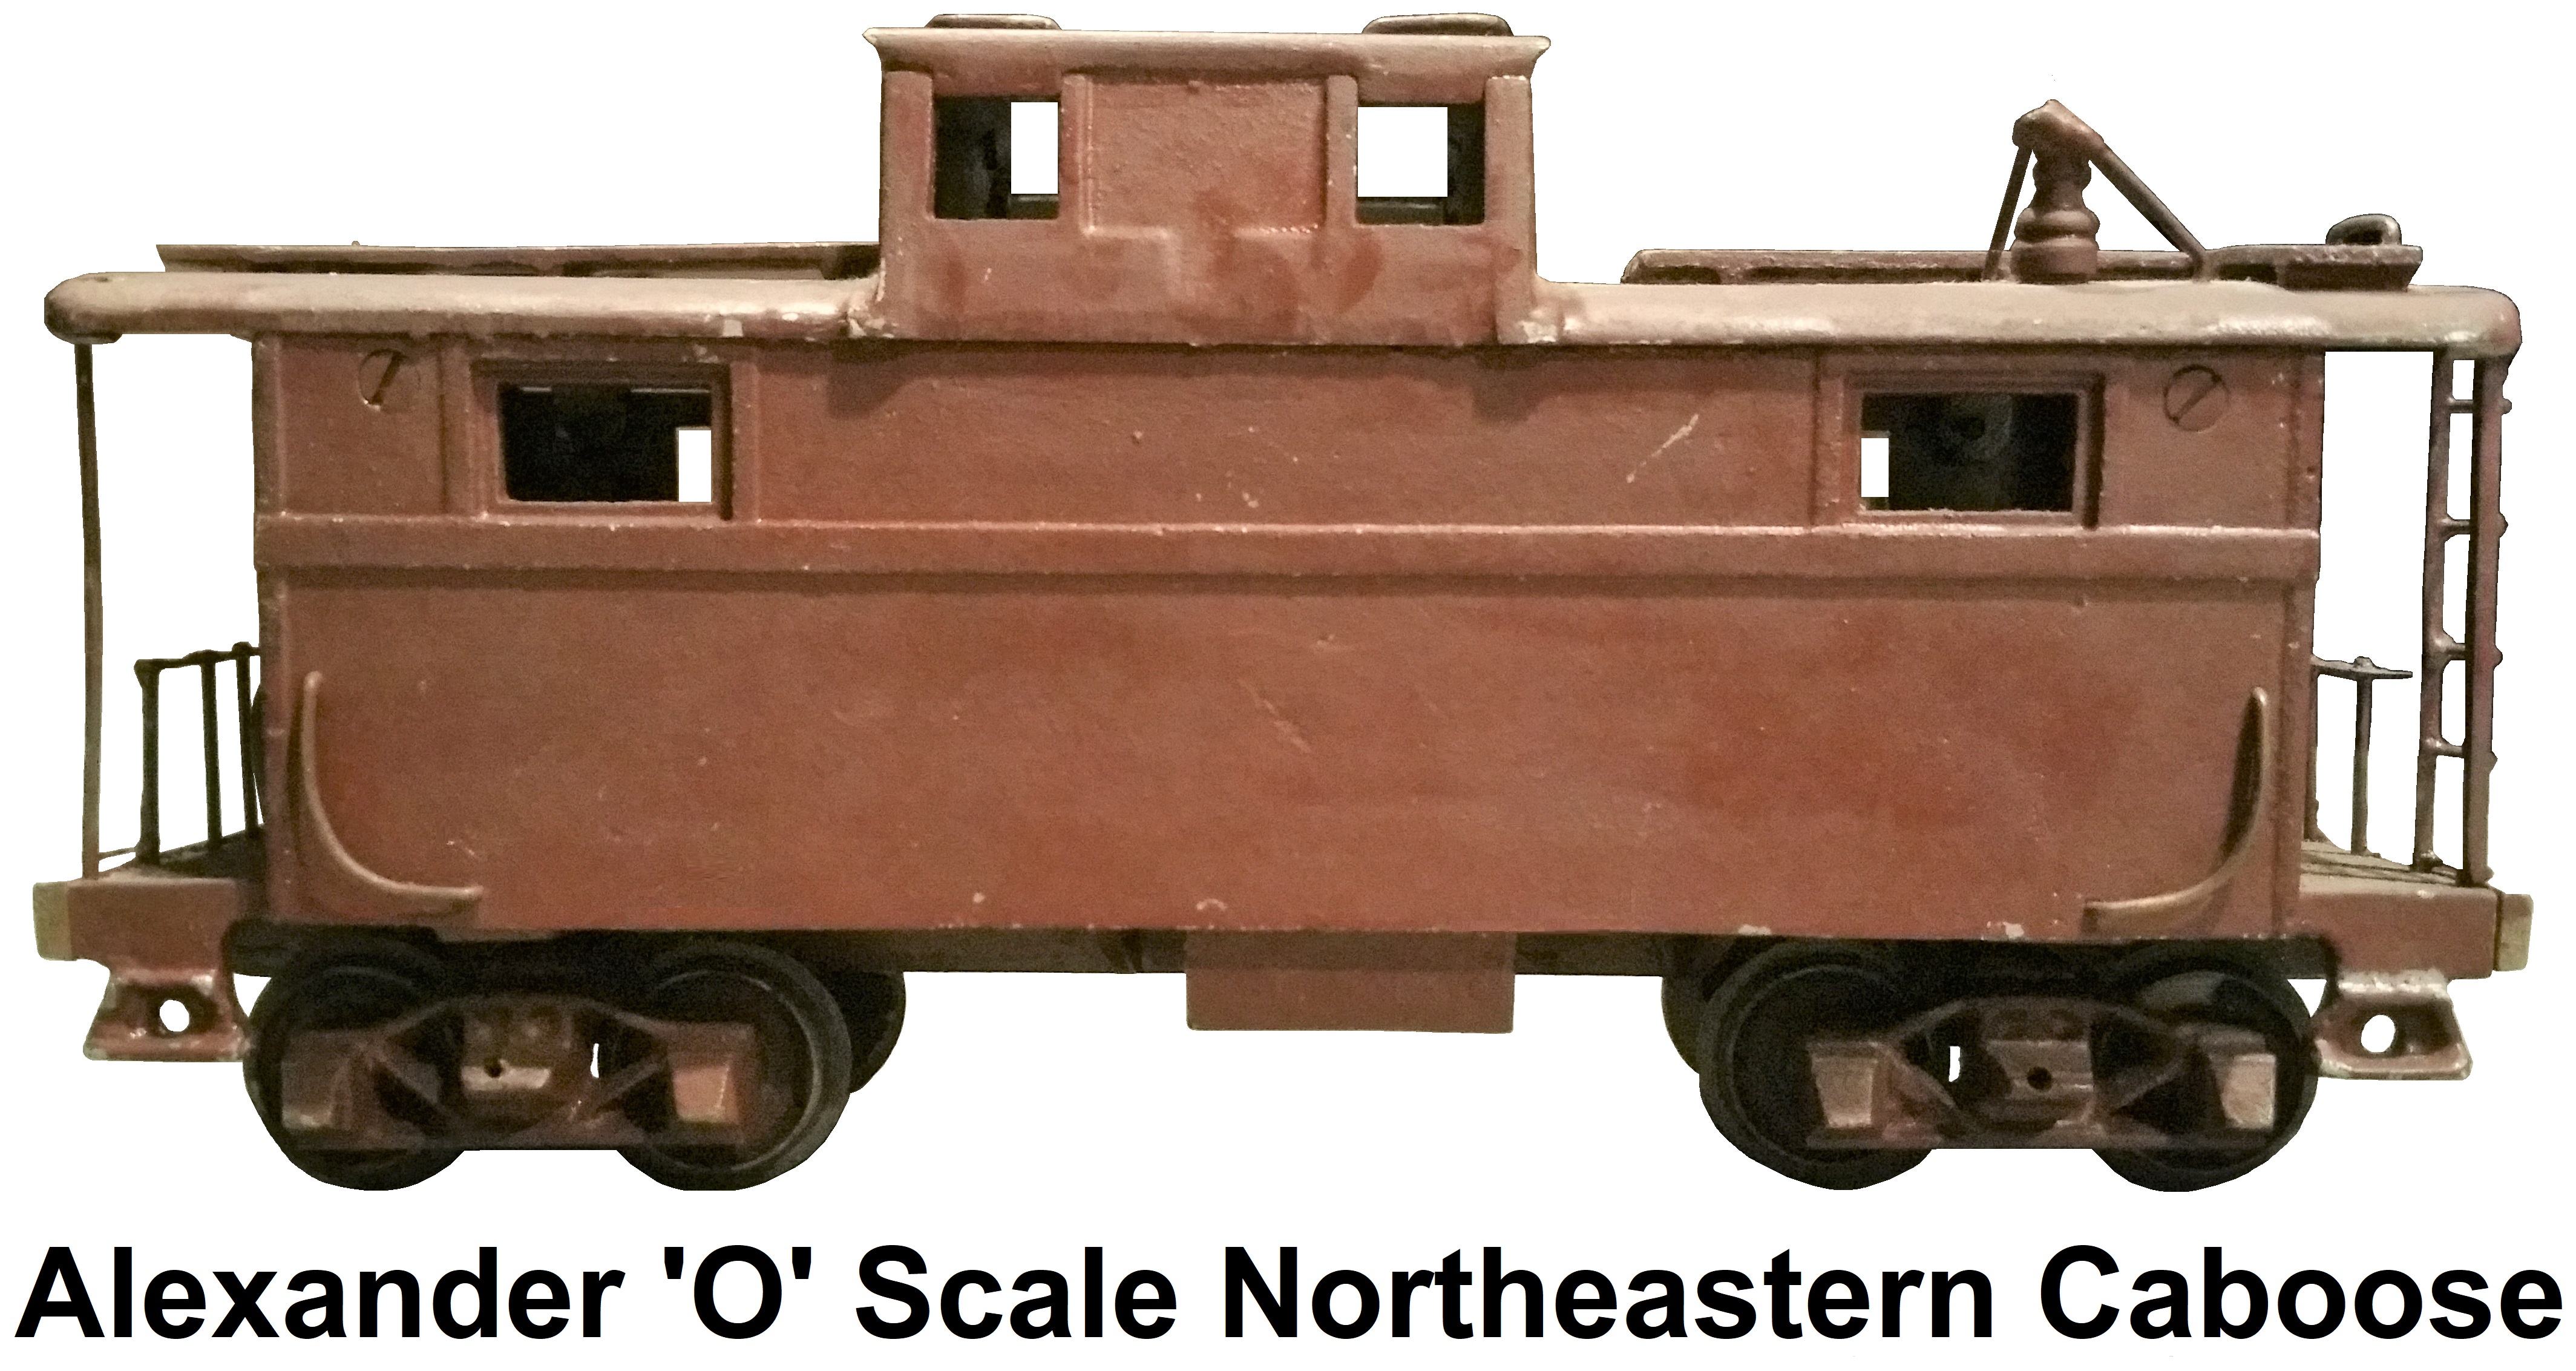 Ed Alexander 'O' scale kit-built Northeastern Cupola Caboose